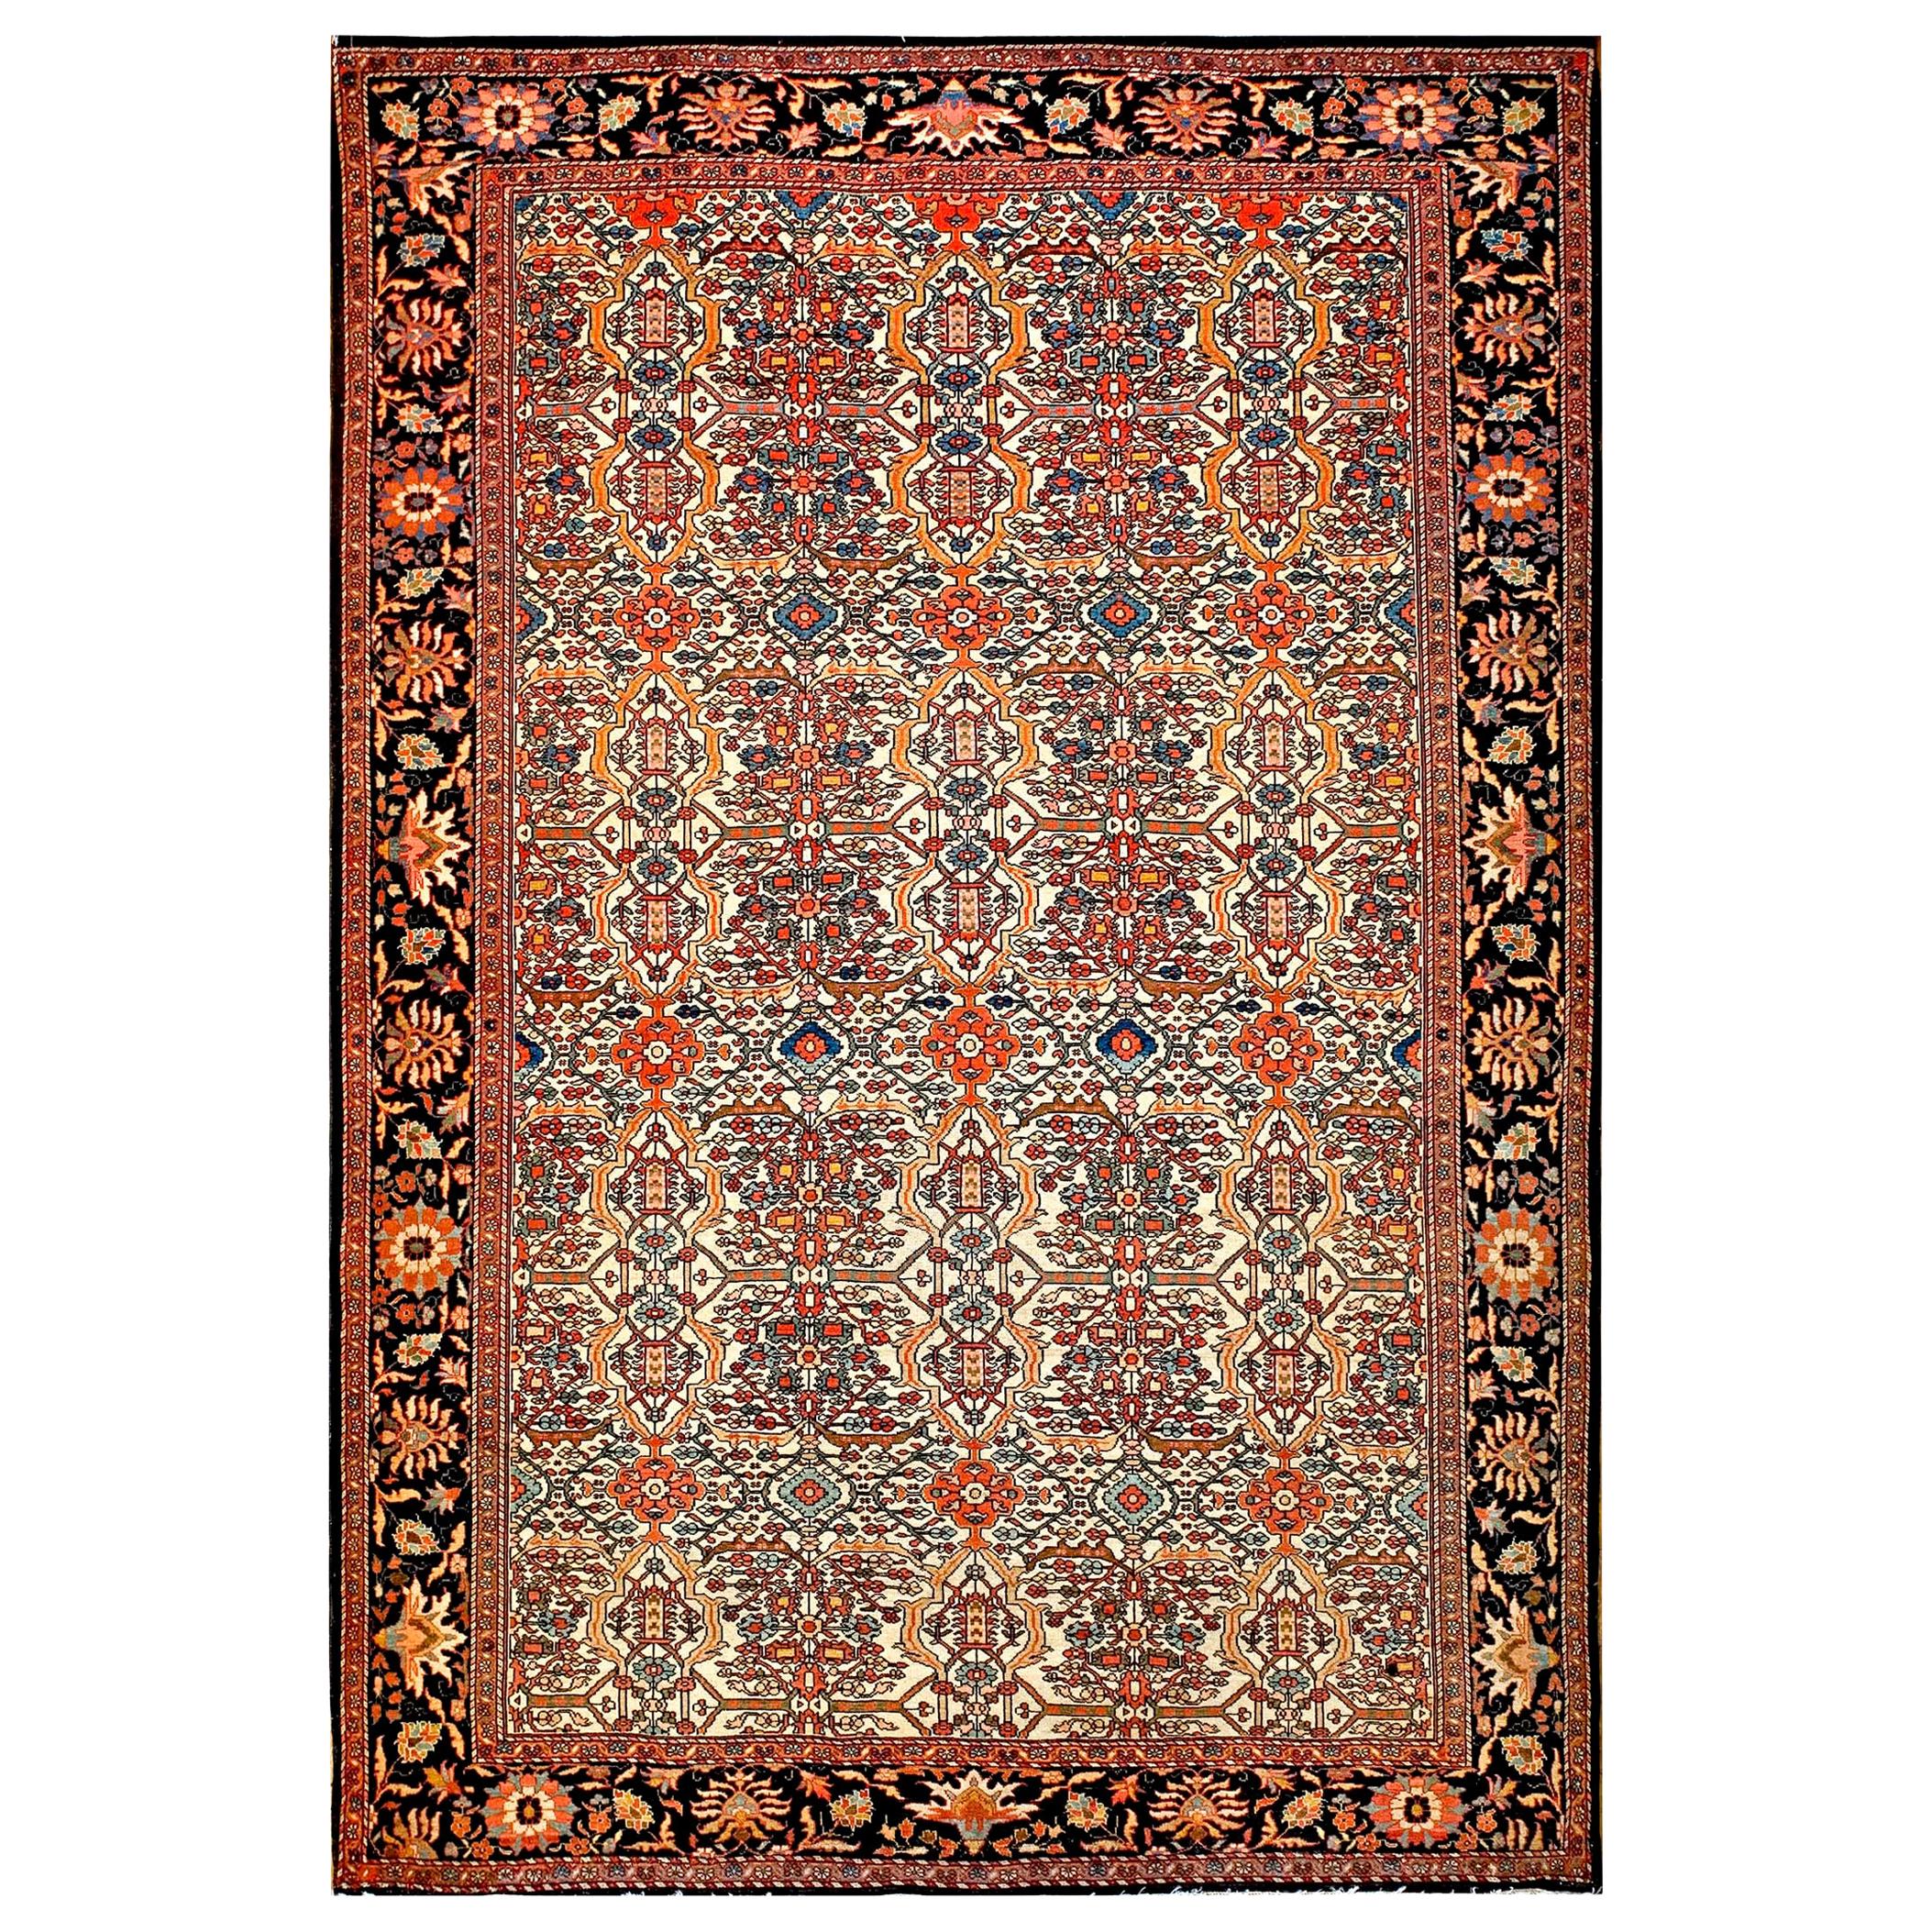 19th Century Persian Sarouk Farahan Carpet ( 4'6" x 6'6" - 137 x 196 cm )